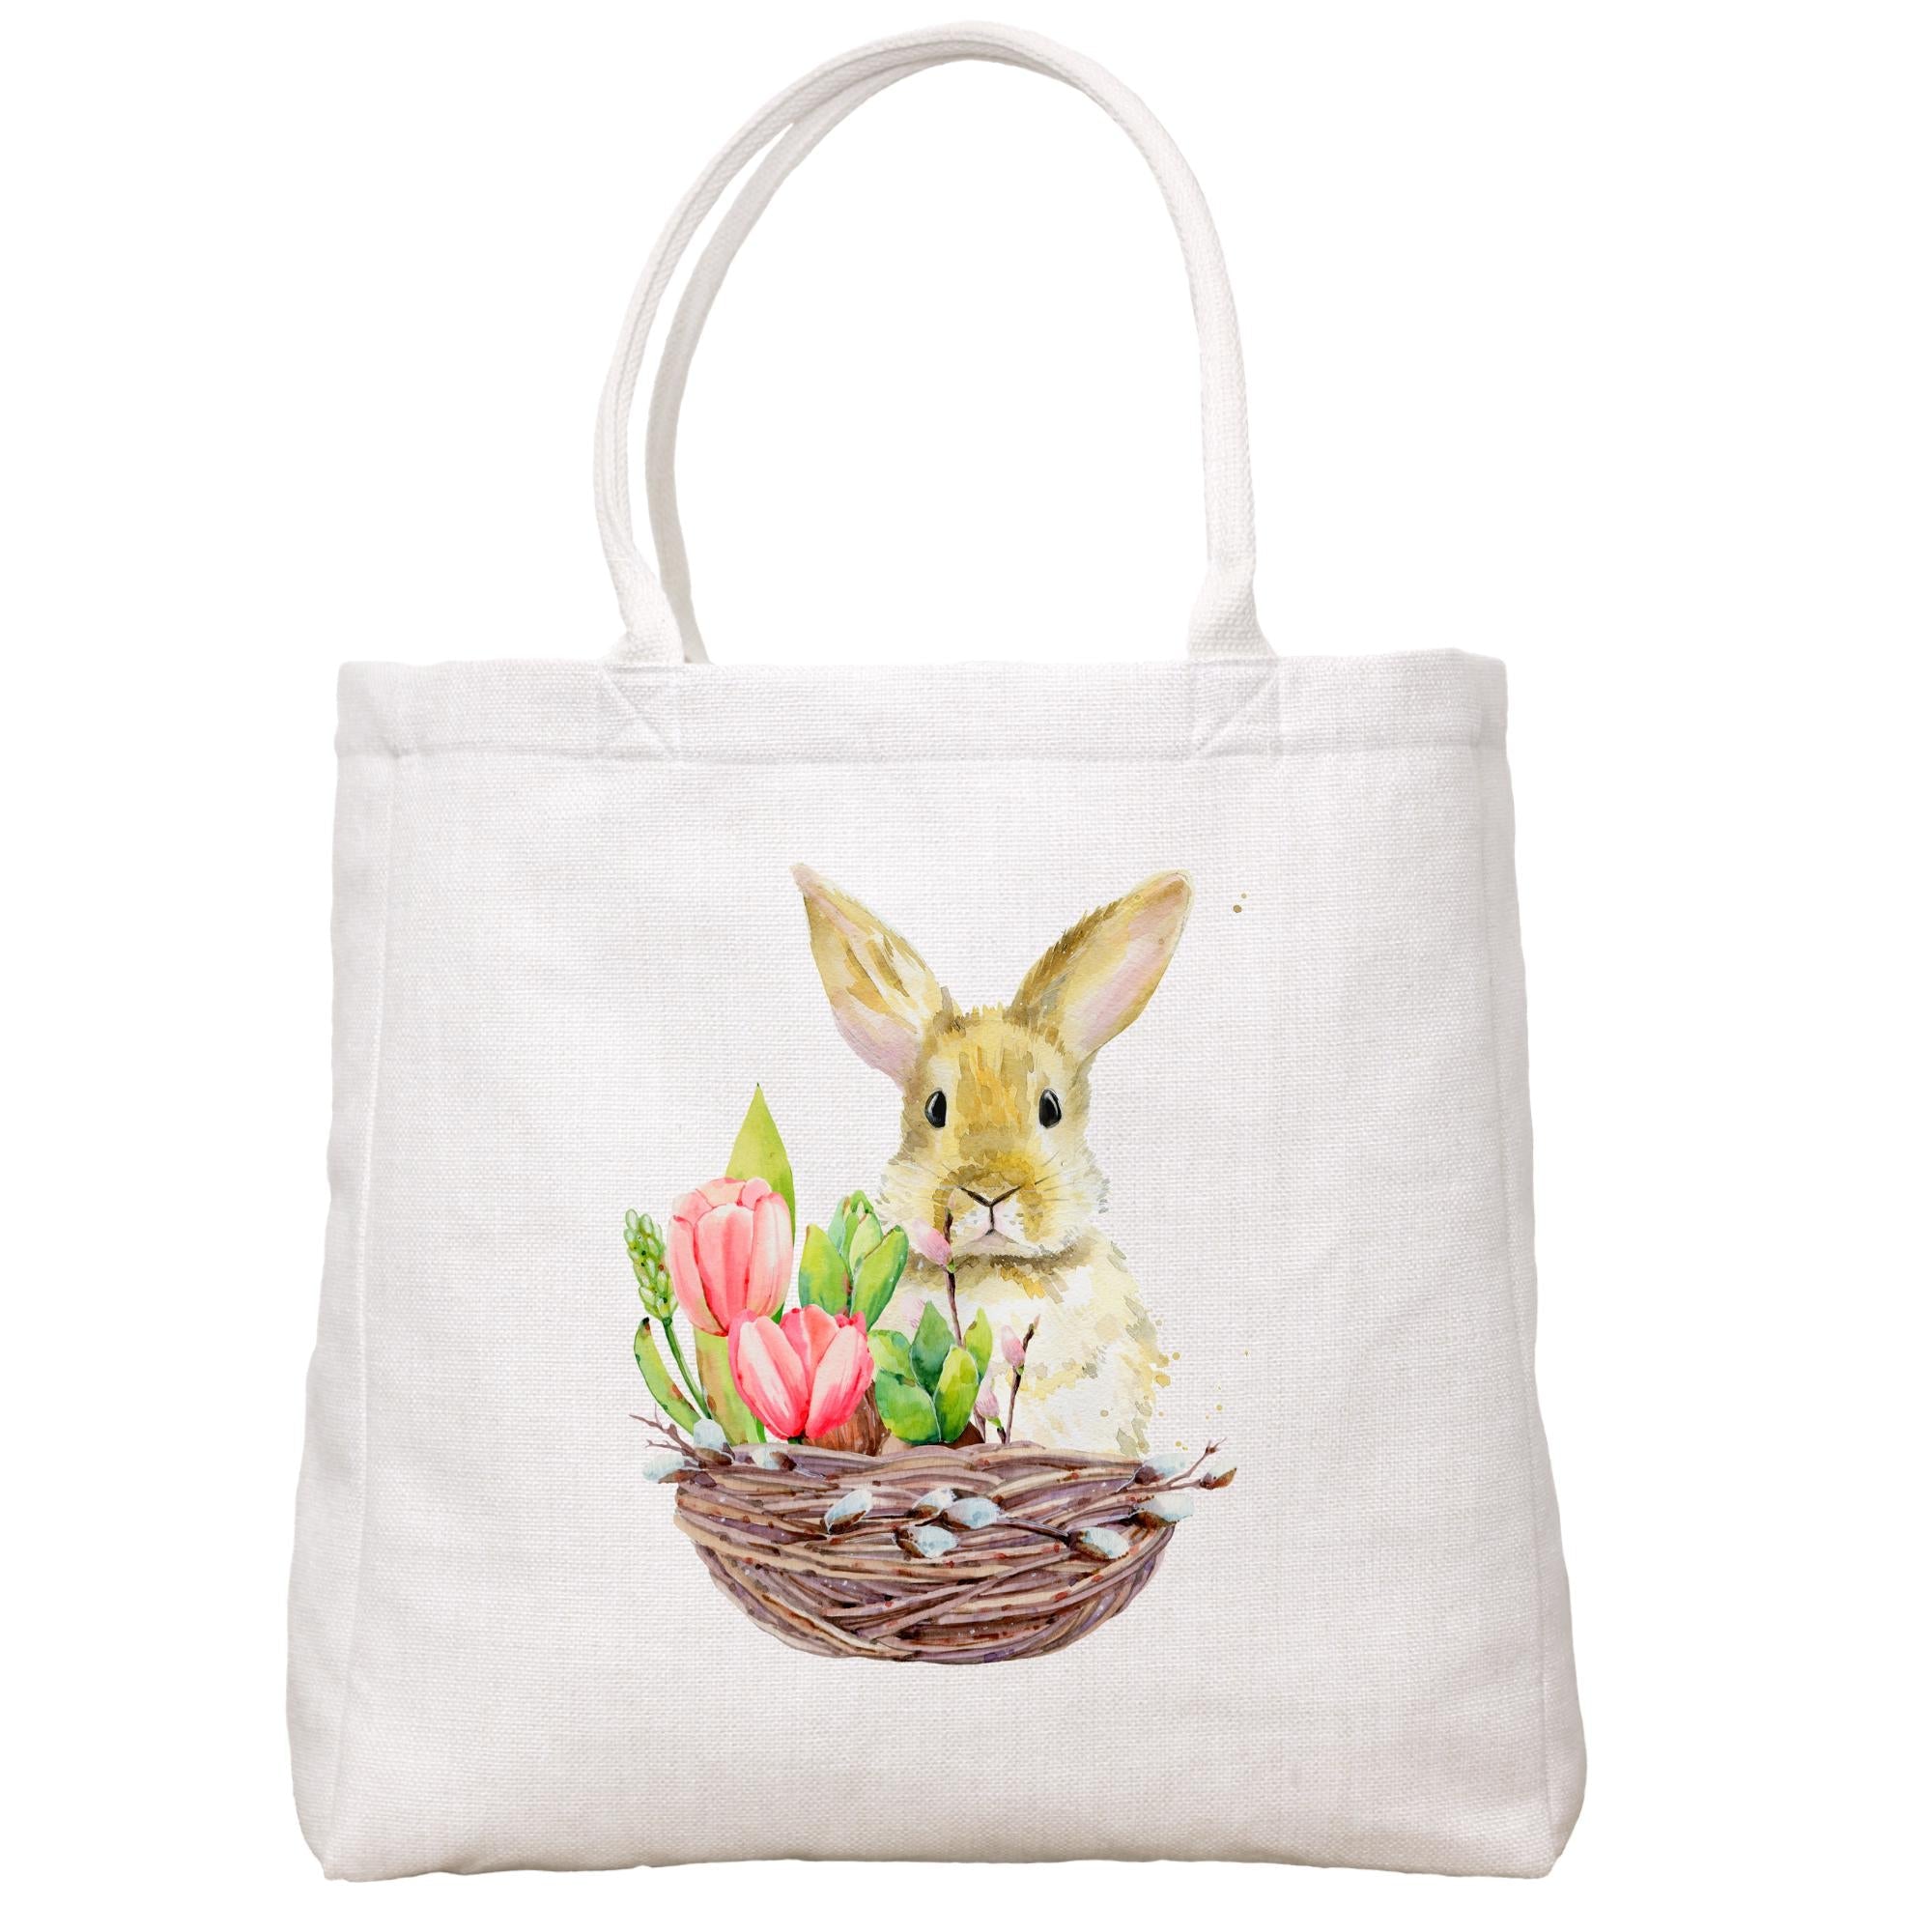 Bunny in Basket Tote Bag Tote Bag - Southern Sisters